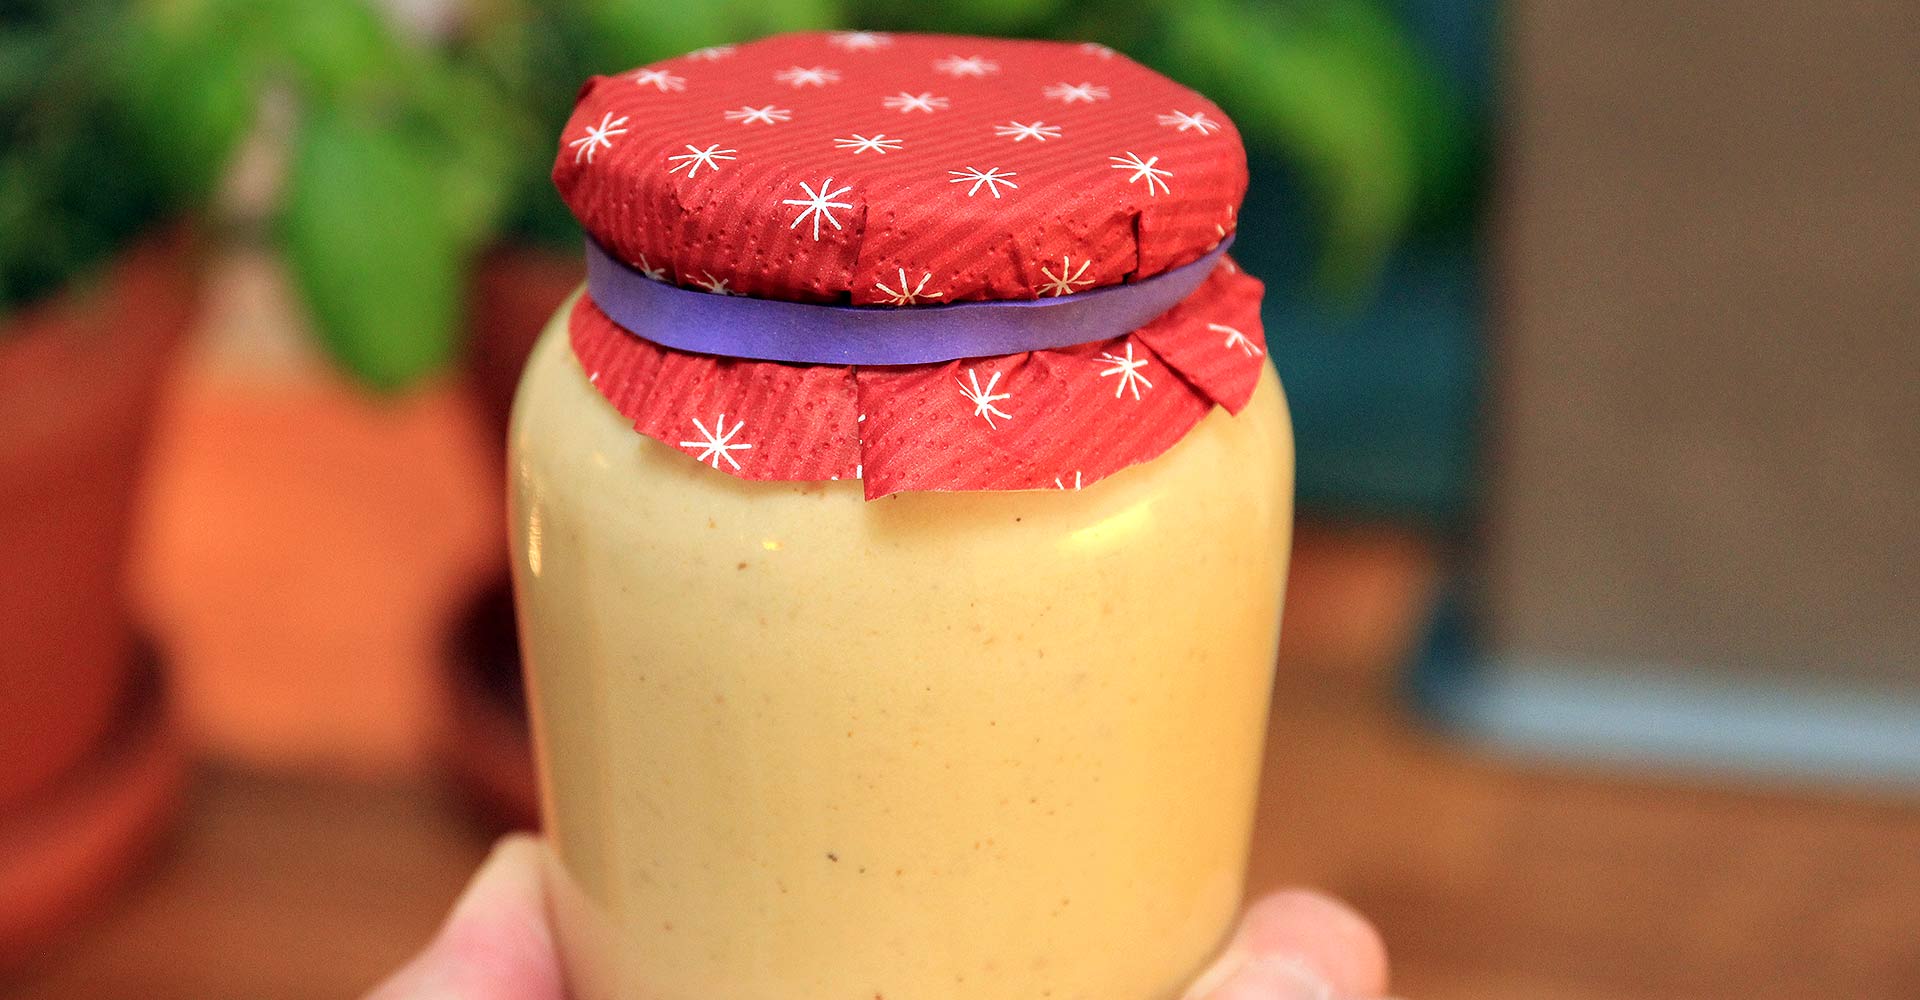 Norwegian Christmas mustard - (julesennep) in a jam jar